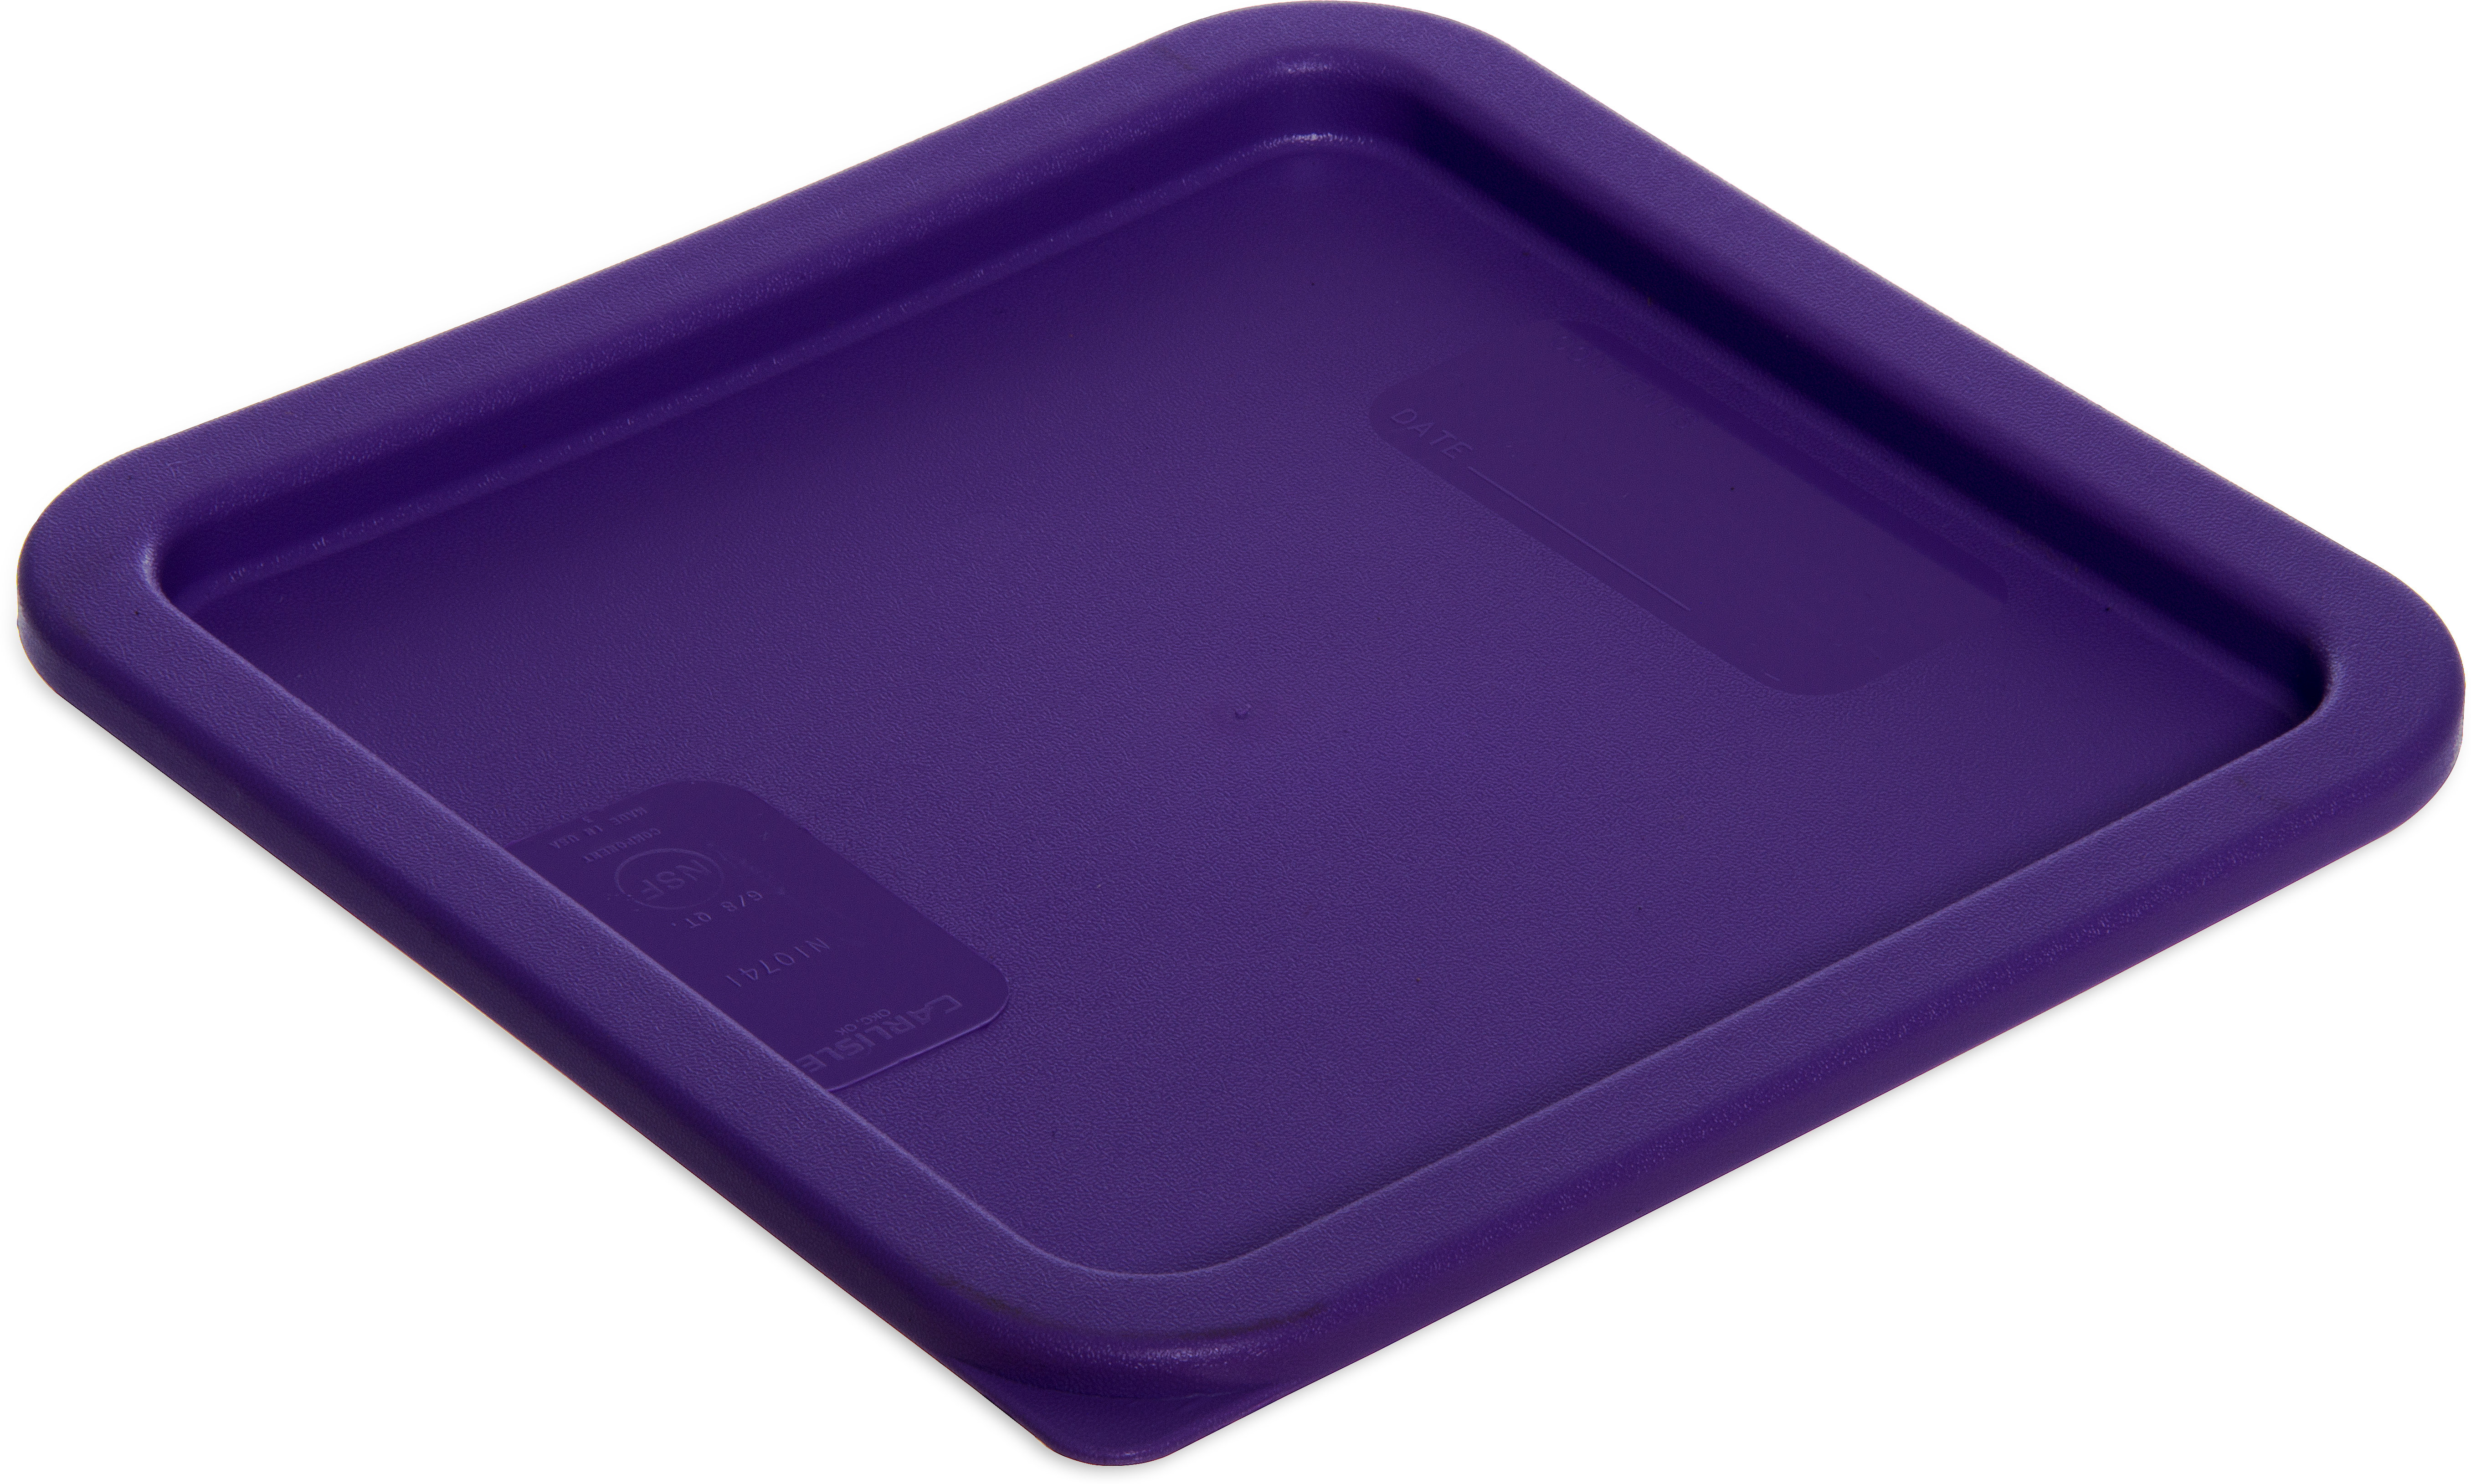 StorPlus Square Container Lid 6-8 qt - Purple